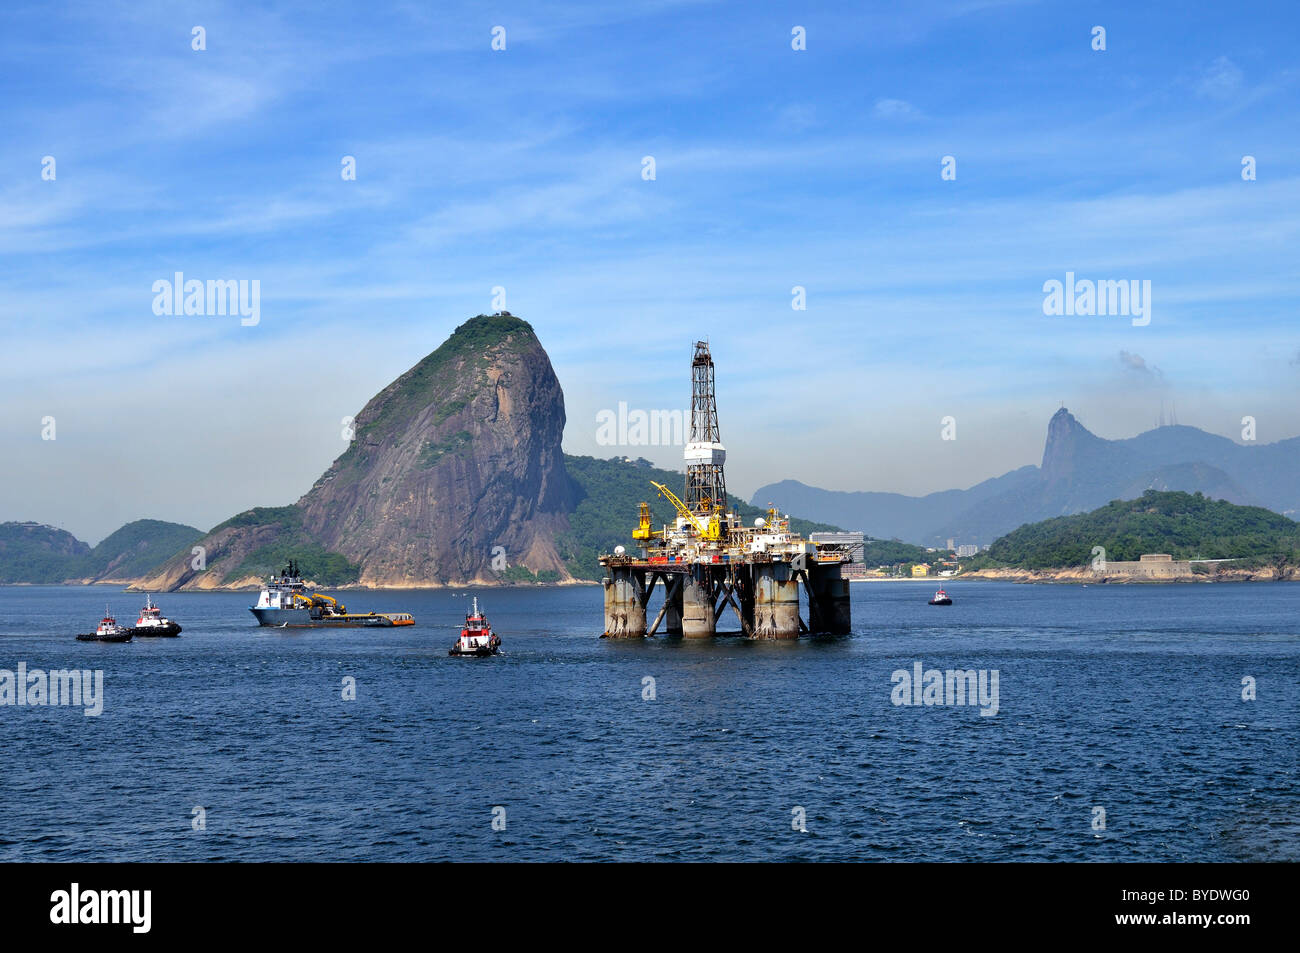 Bohrinsel der brasilianische Ölgesellschaft Petrobras vorbei Zuckerhut, Bahia de Guanabara-Bucht, Rio De Janeiro, Brasilien Stockfoto